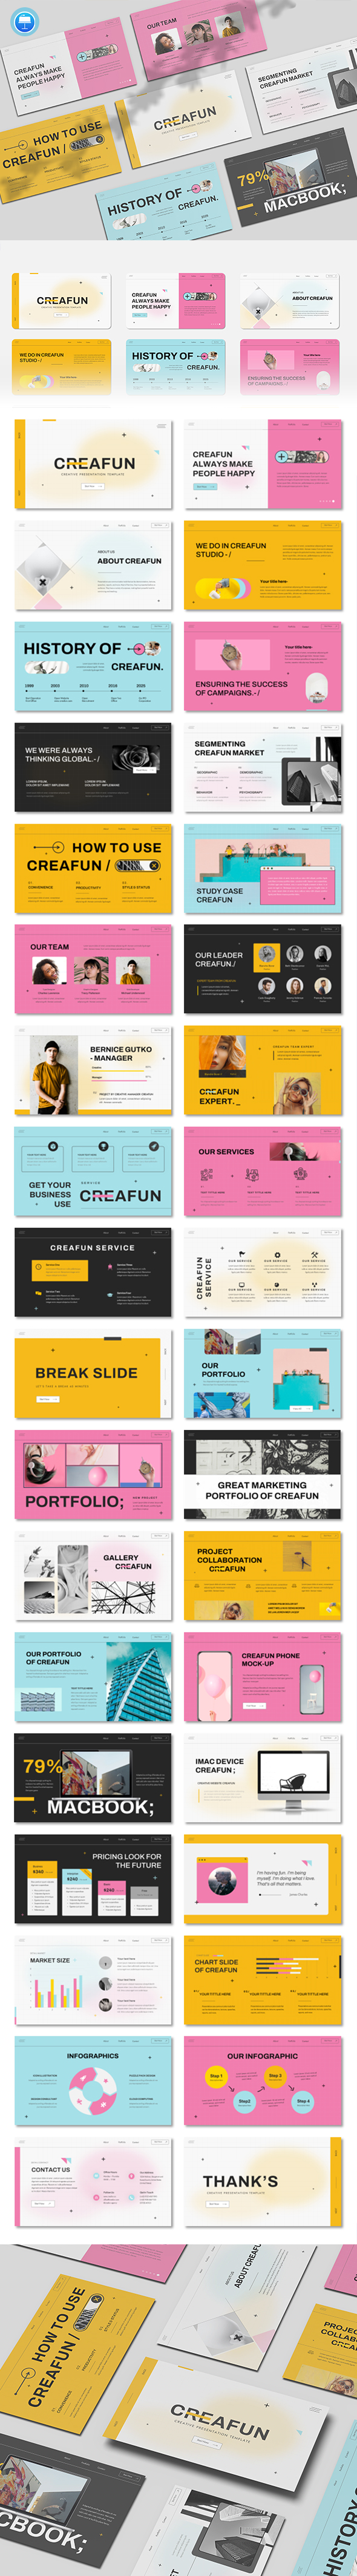 [DOWNLOAD]Creafun - Creative Fun Agency Presentation Template